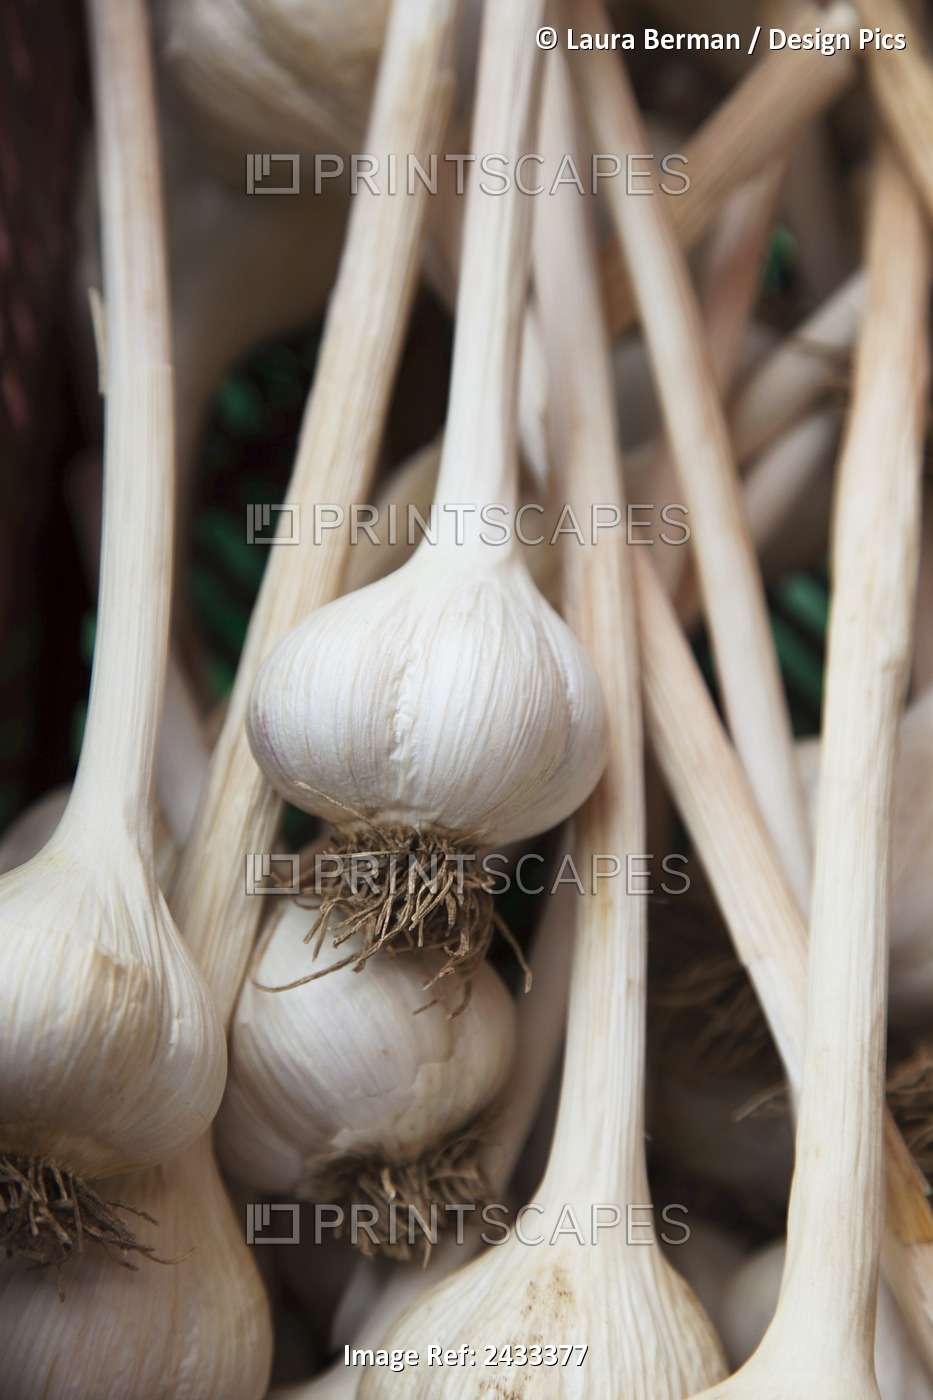 Large Clean Organically Grown Hardneck Garlic Bulbs; Ontario, Canada